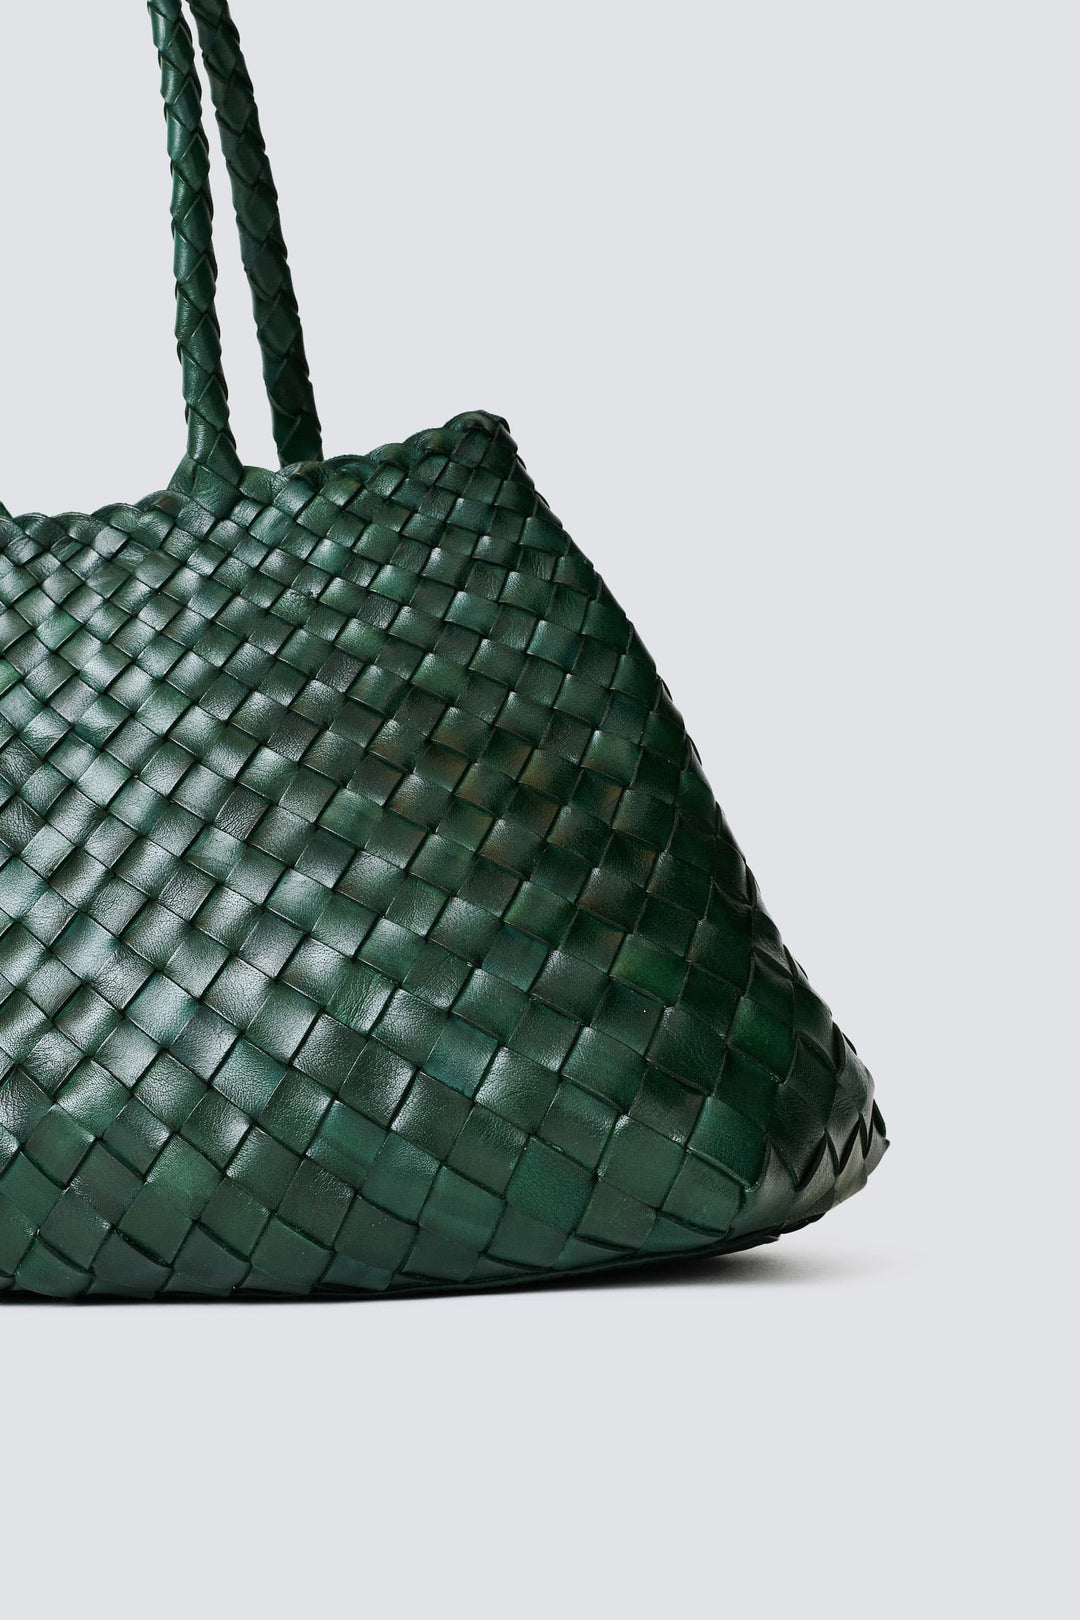 Dragon Diffusion woven leather bag handmade - Santa Croce Forest Green